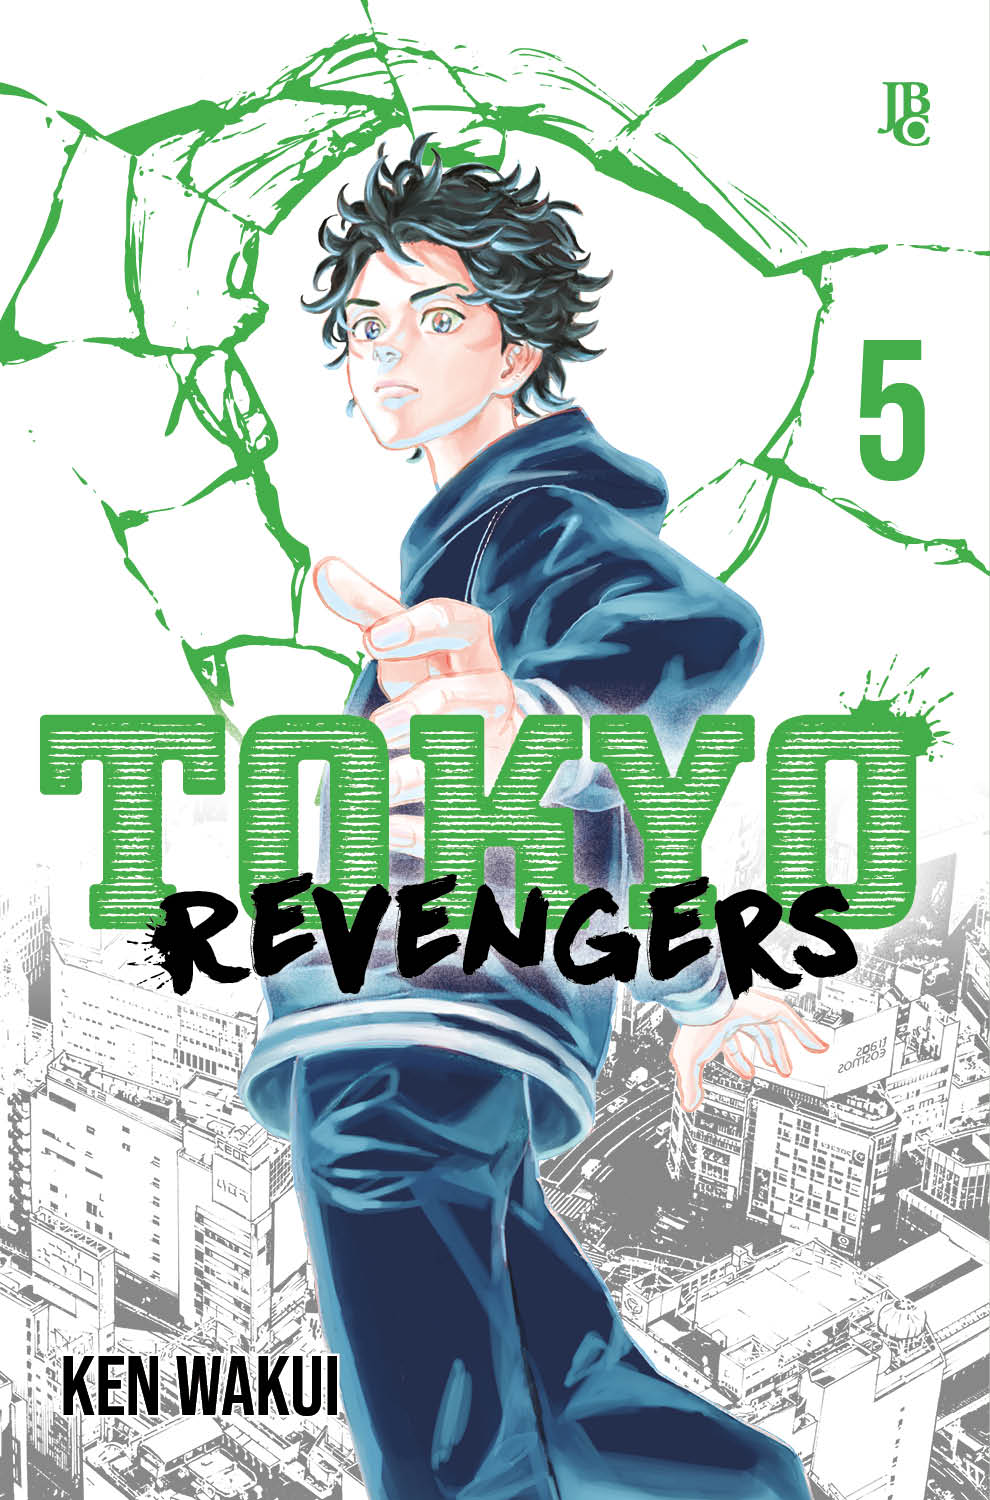 Tokyo Revengers - Volume 08 (Editora JBC) - Loja Pégaso - Leia Mais. Leia  Mangá